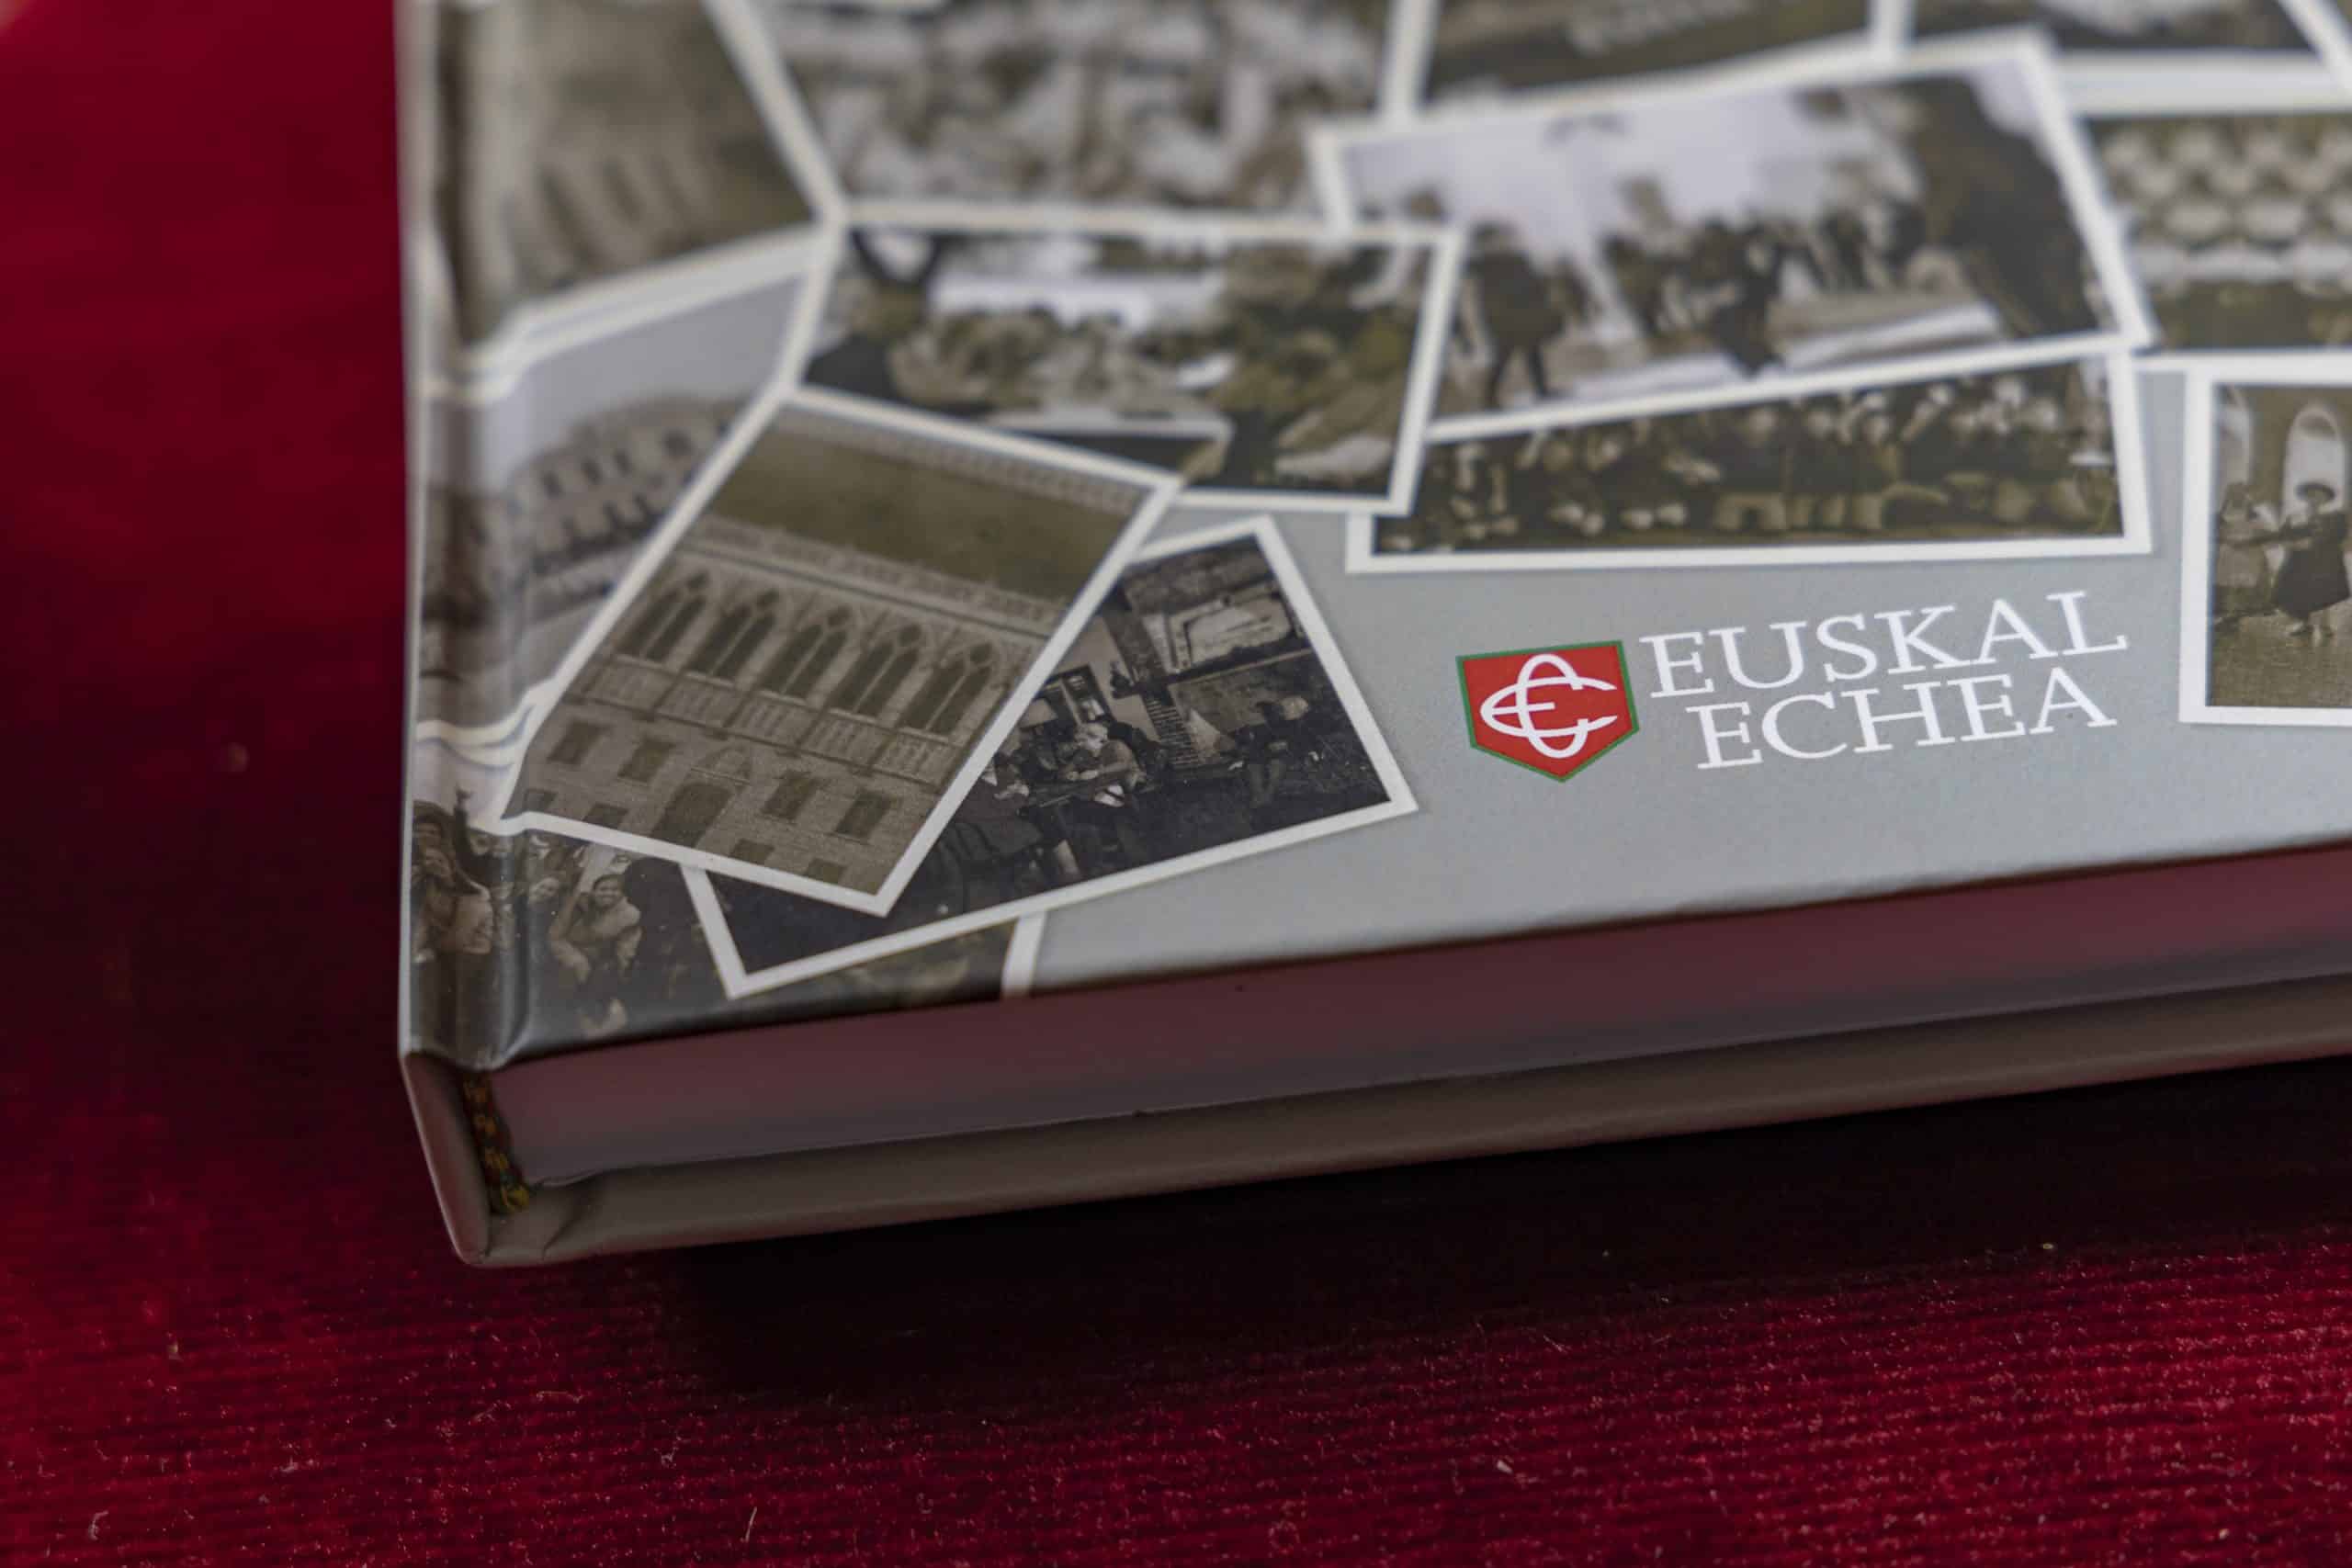 Libro en la mesa, se aprecia el logo de Euskal Echea